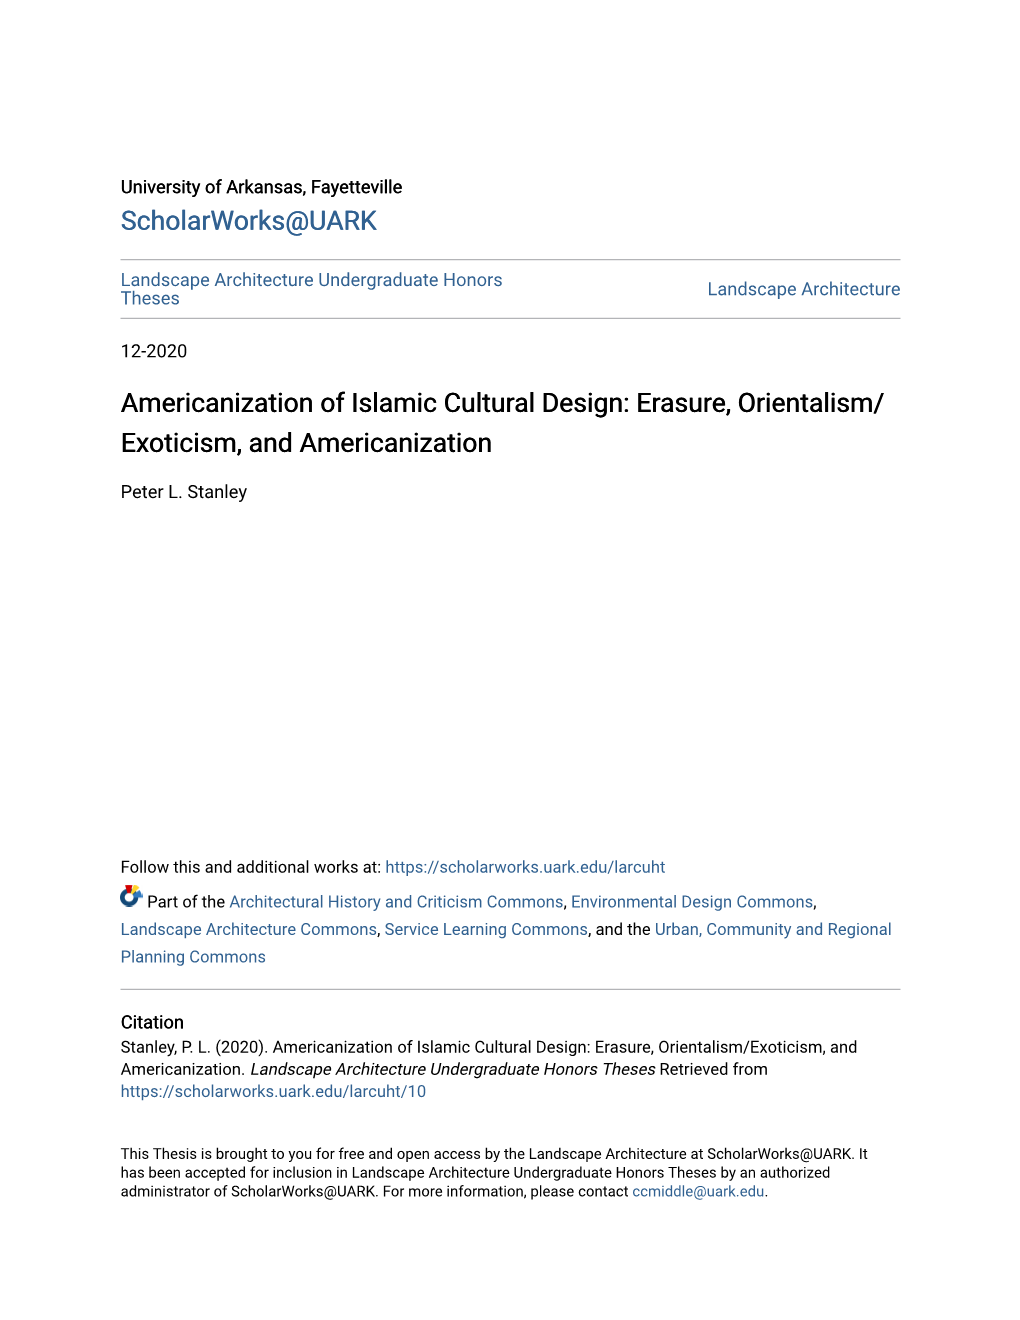 Americanization of Islamic Cultural Design: Erasure, Orientalism/Exoticism, and Americanization